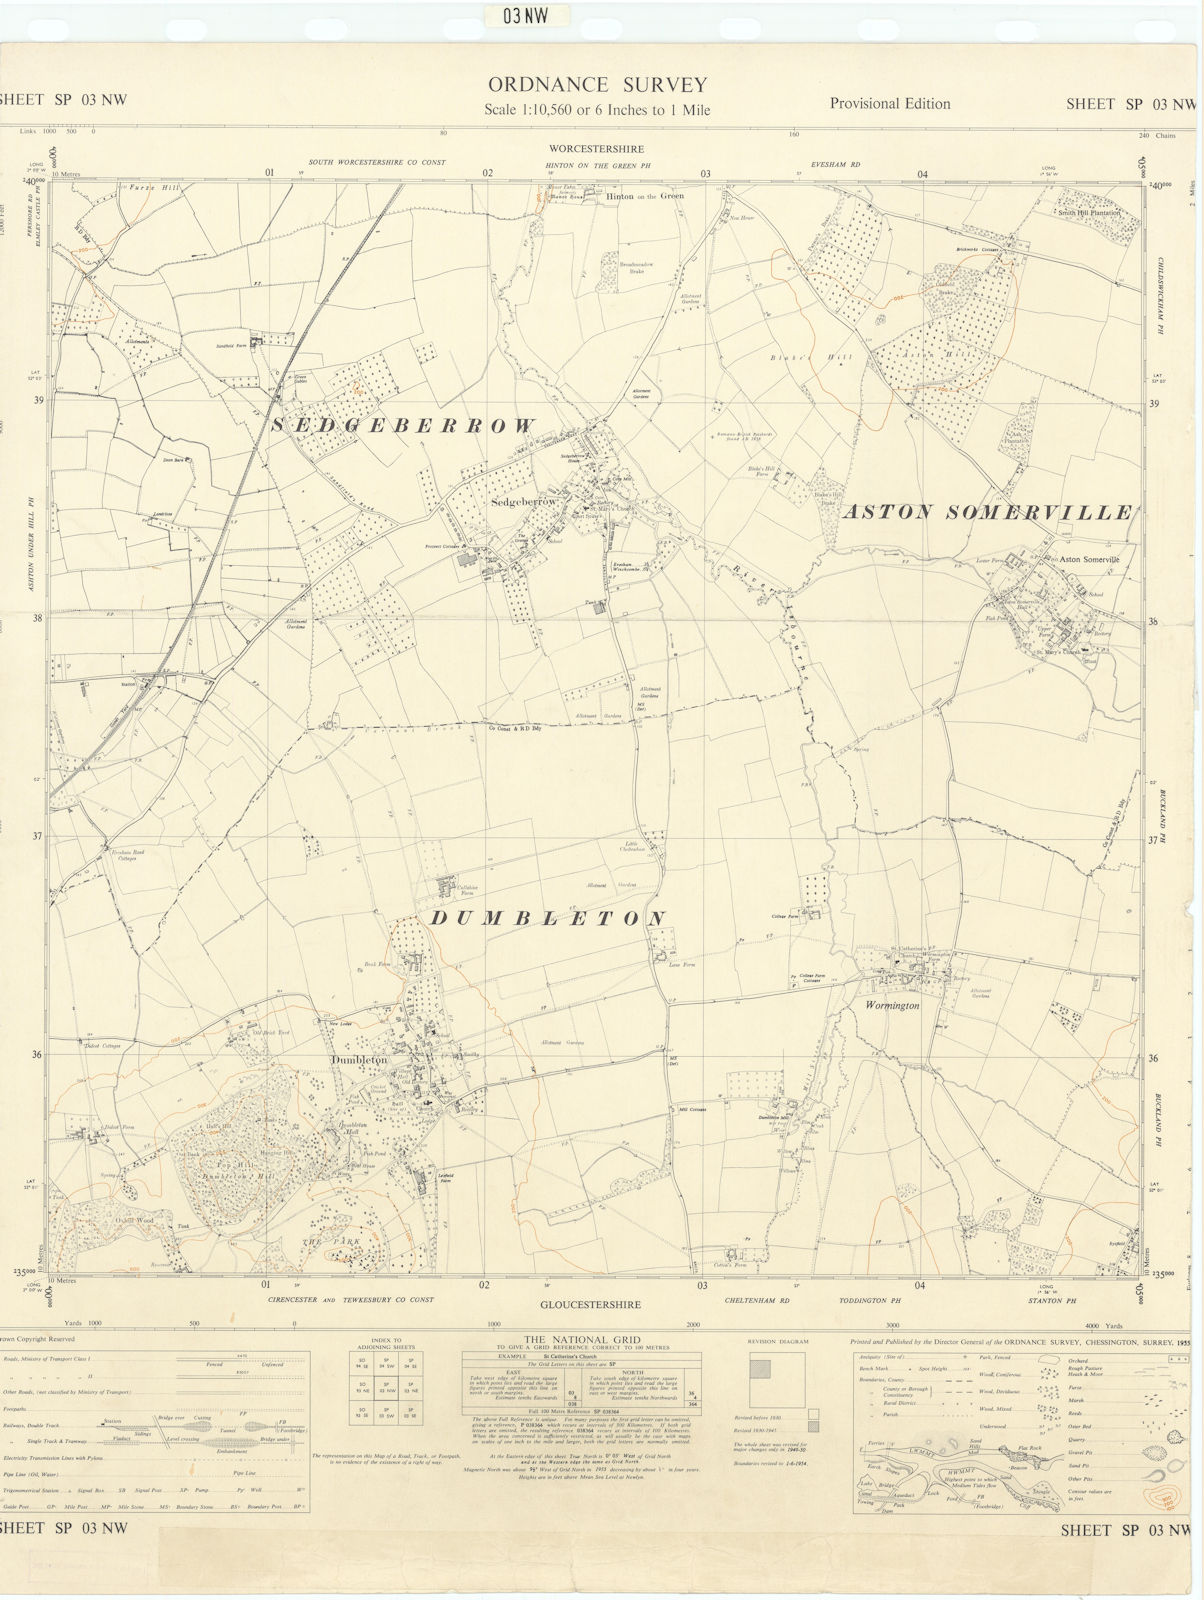 Ordnance Survey SP03NW Worcs Aston Somerville Dumbleton Sedgeberrow 1955 map